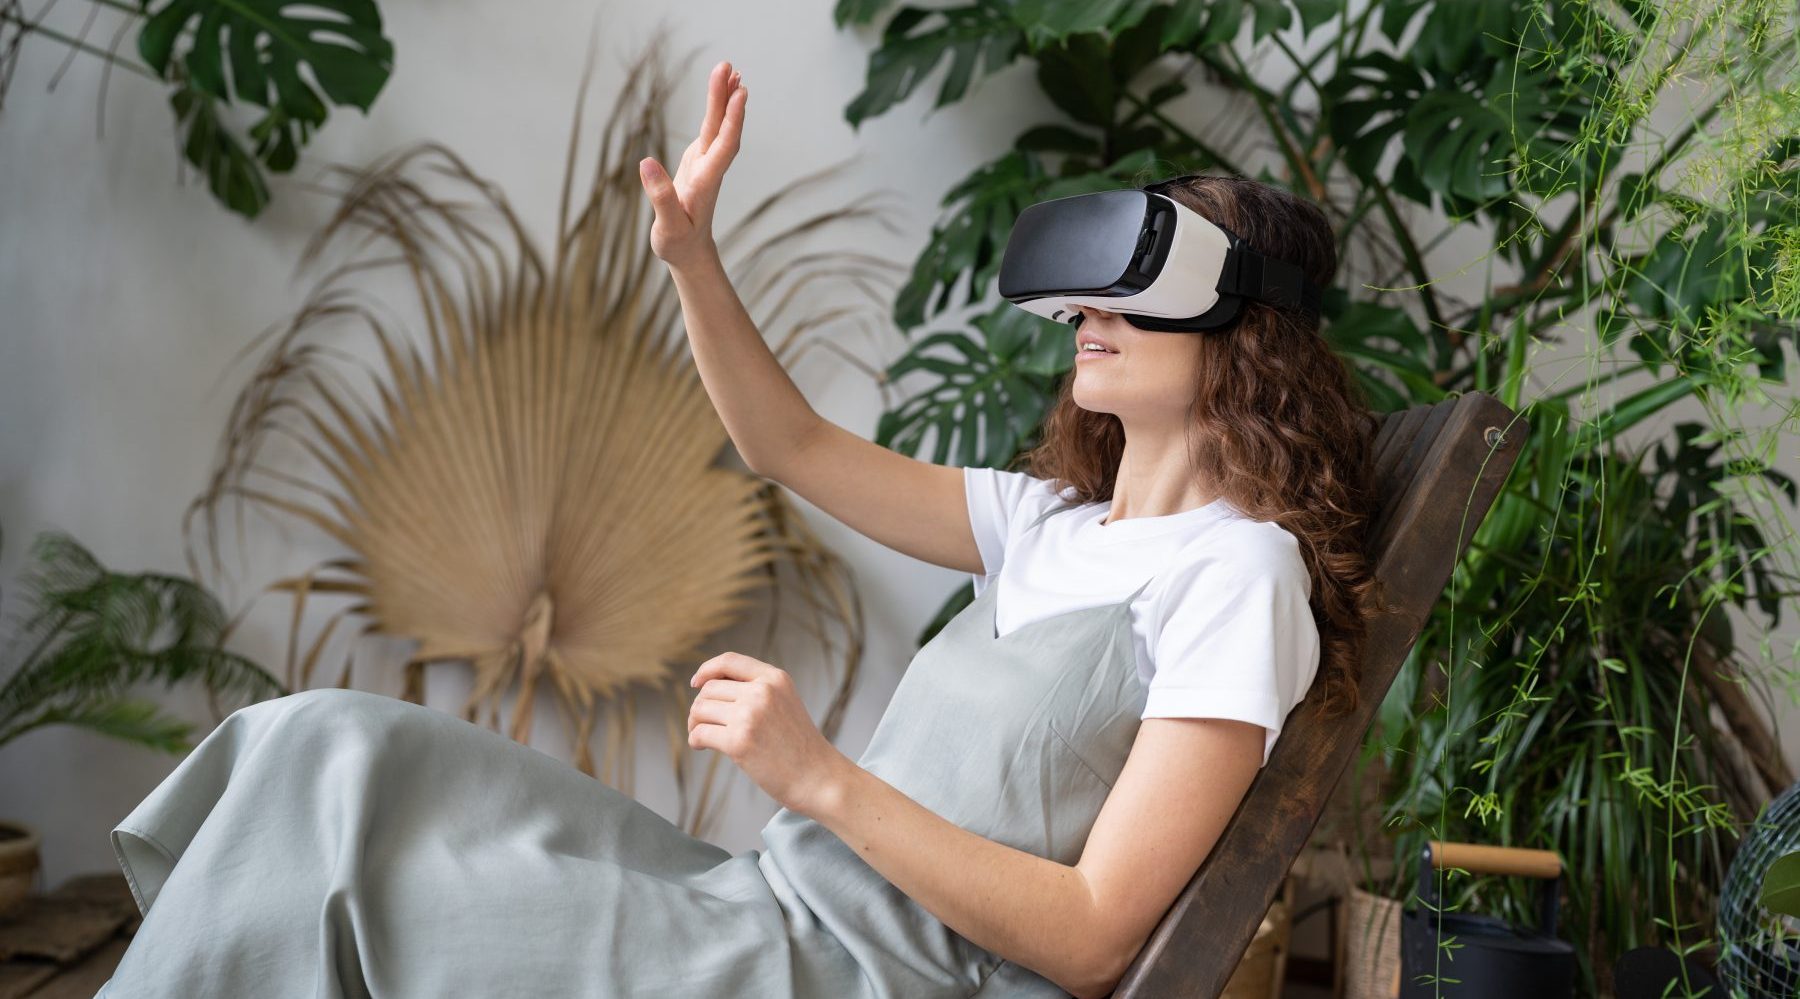 Immersive virtual reality helps to promote pro-environmental behavioural strategies